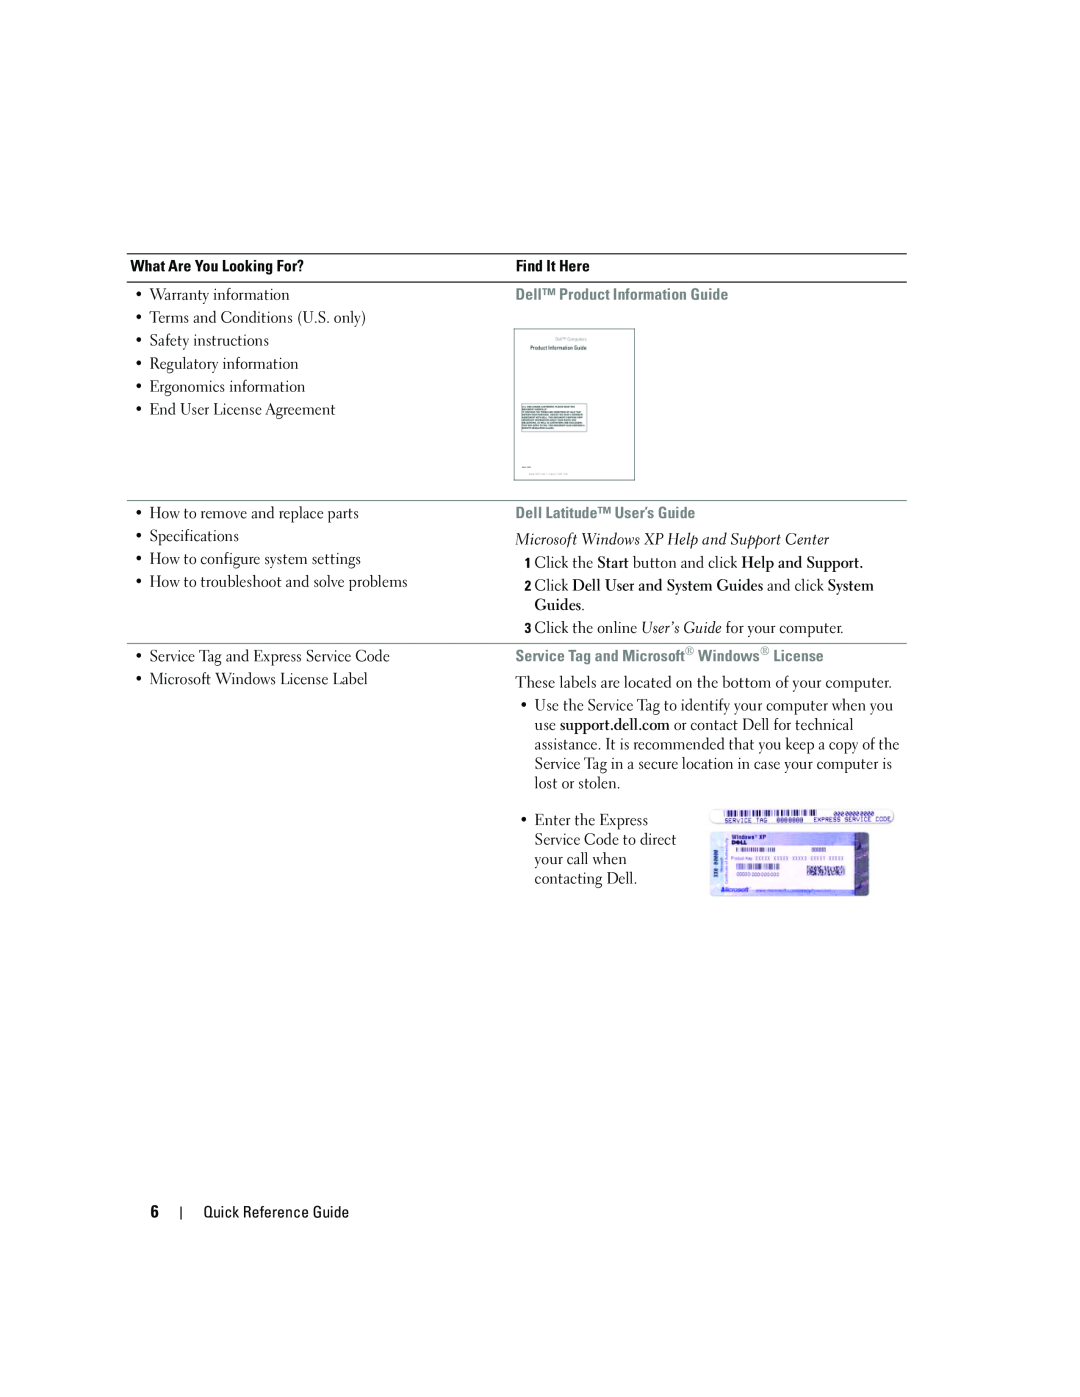 Dell ATG D620 manual Dell Product Information Guide, Dell Latitude User’s Guide, Service Tag and Microsoft Windows License 